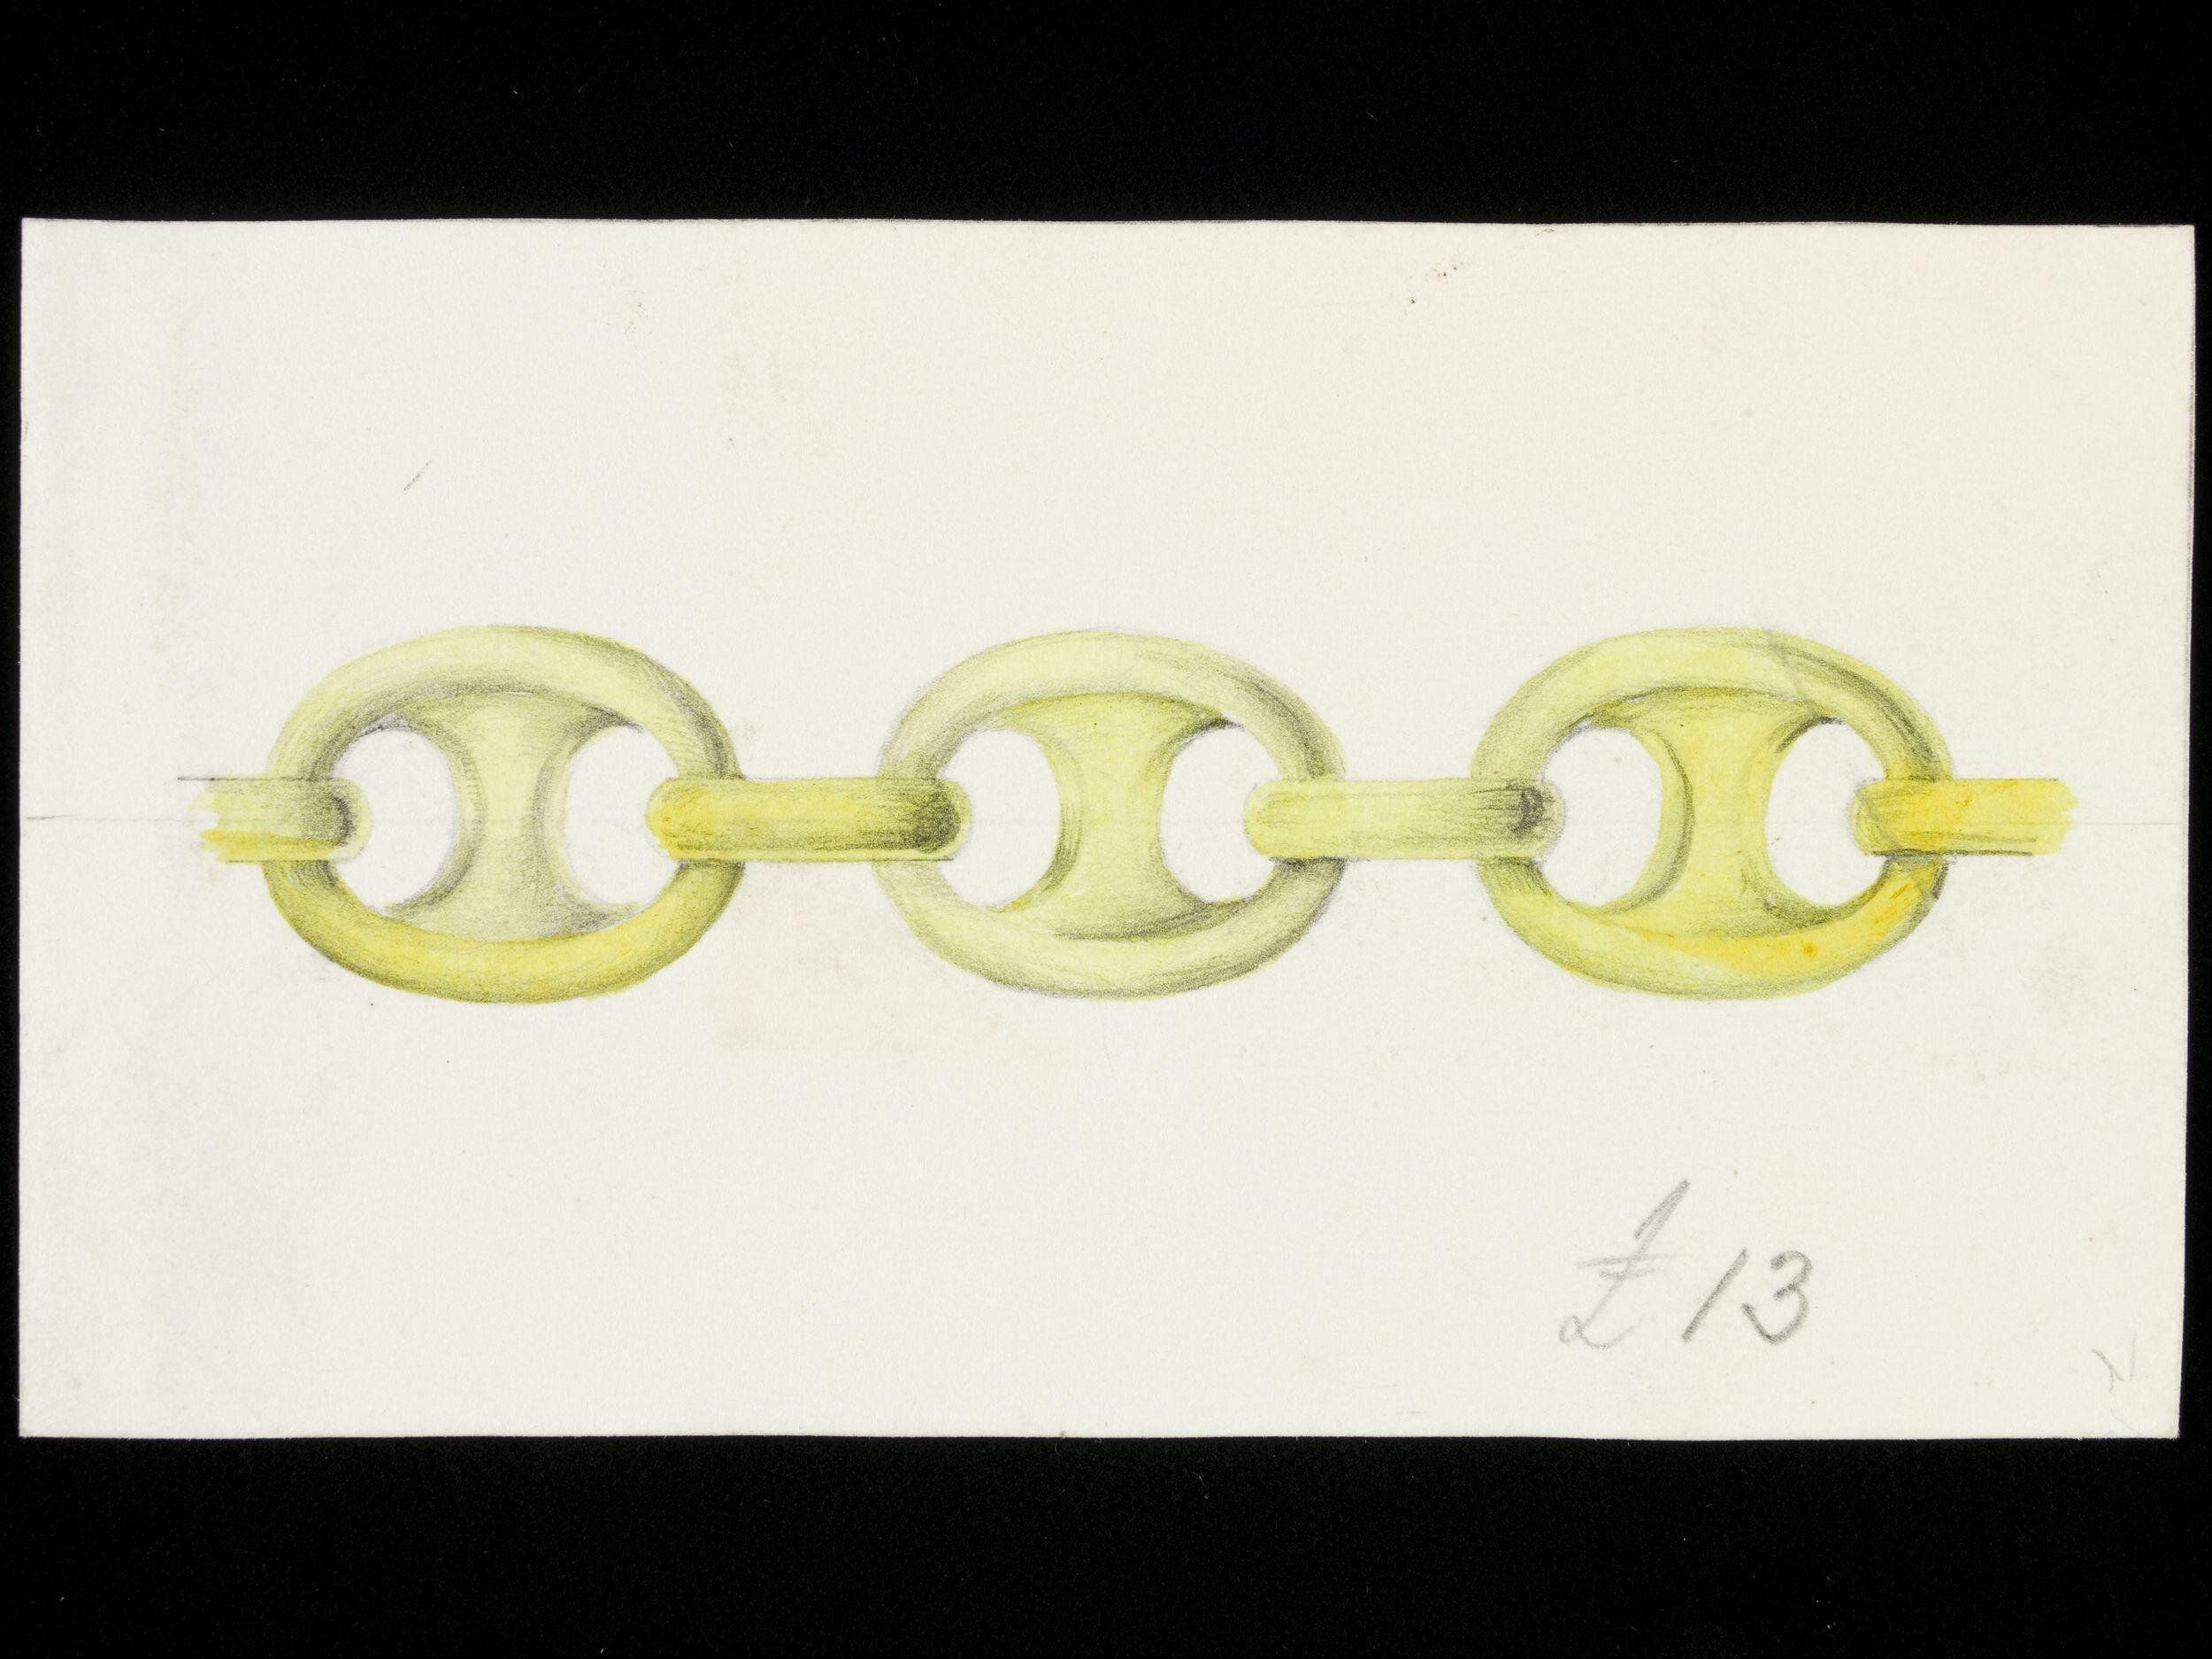 Mariner chain design from The Brogden Album of jewelry design, 1860s, Victoria & Albert Museum. 